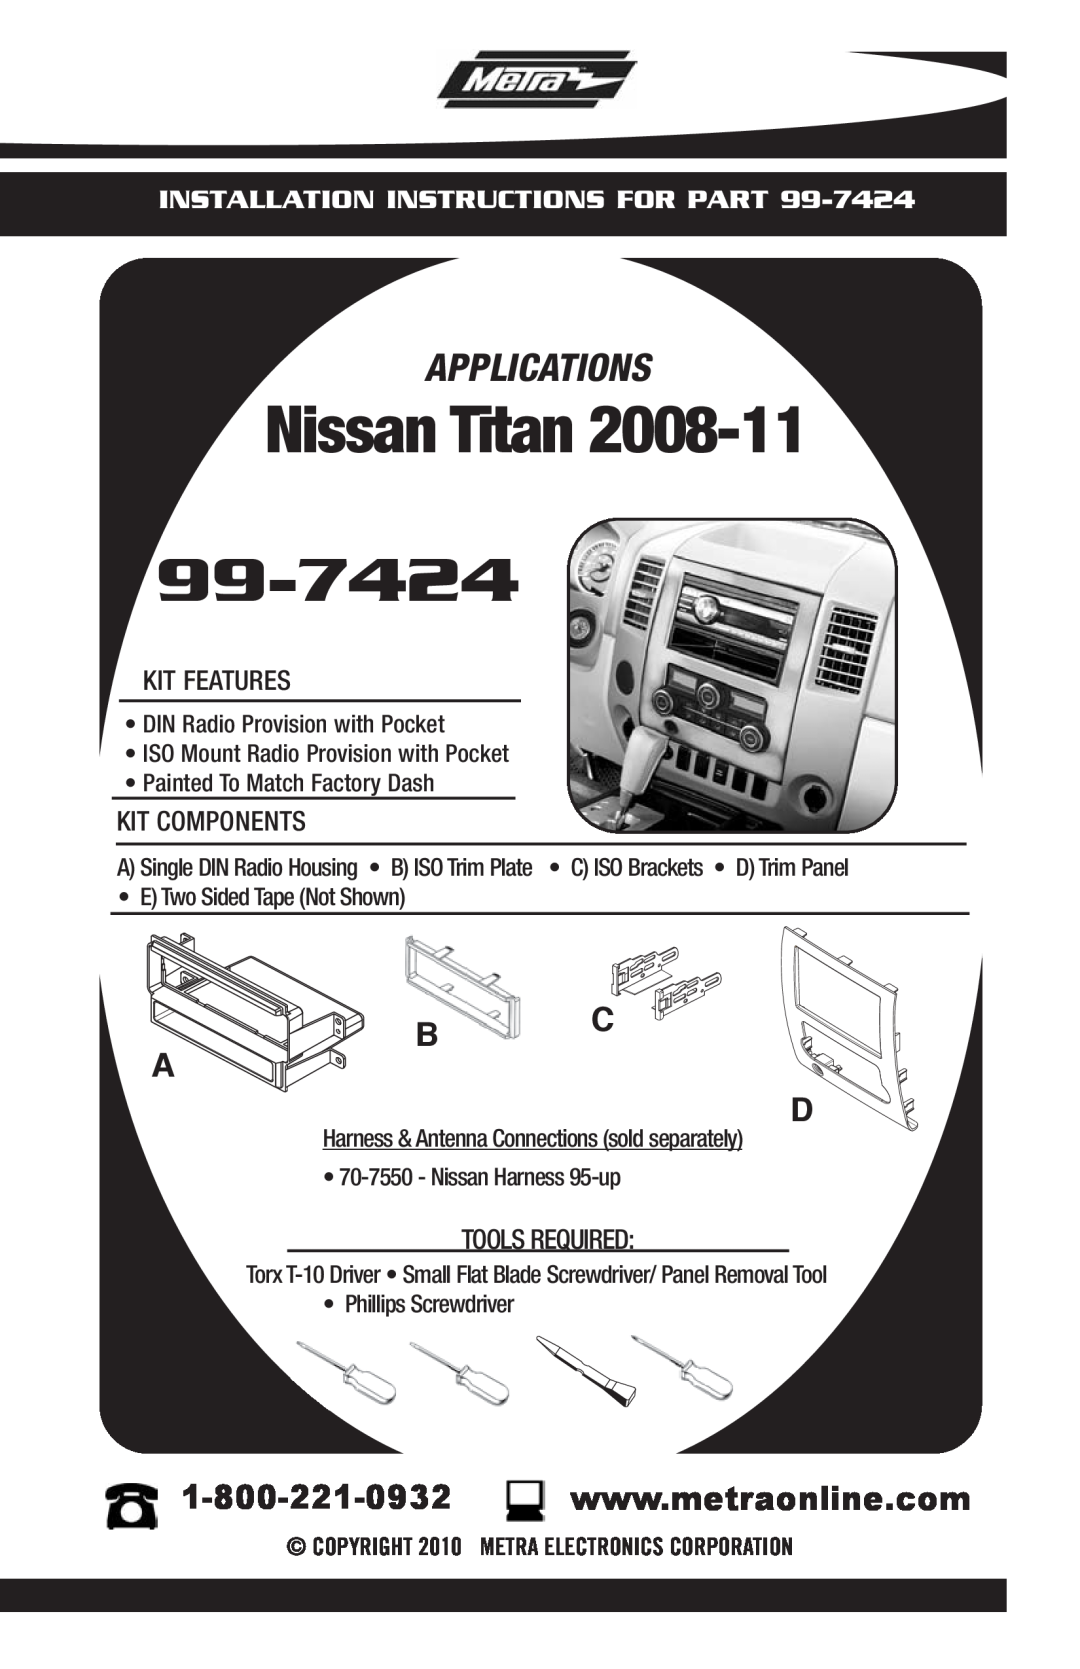 Metra Electronics installation instructions Nissan Titan 99-7424, Applications, B C D 